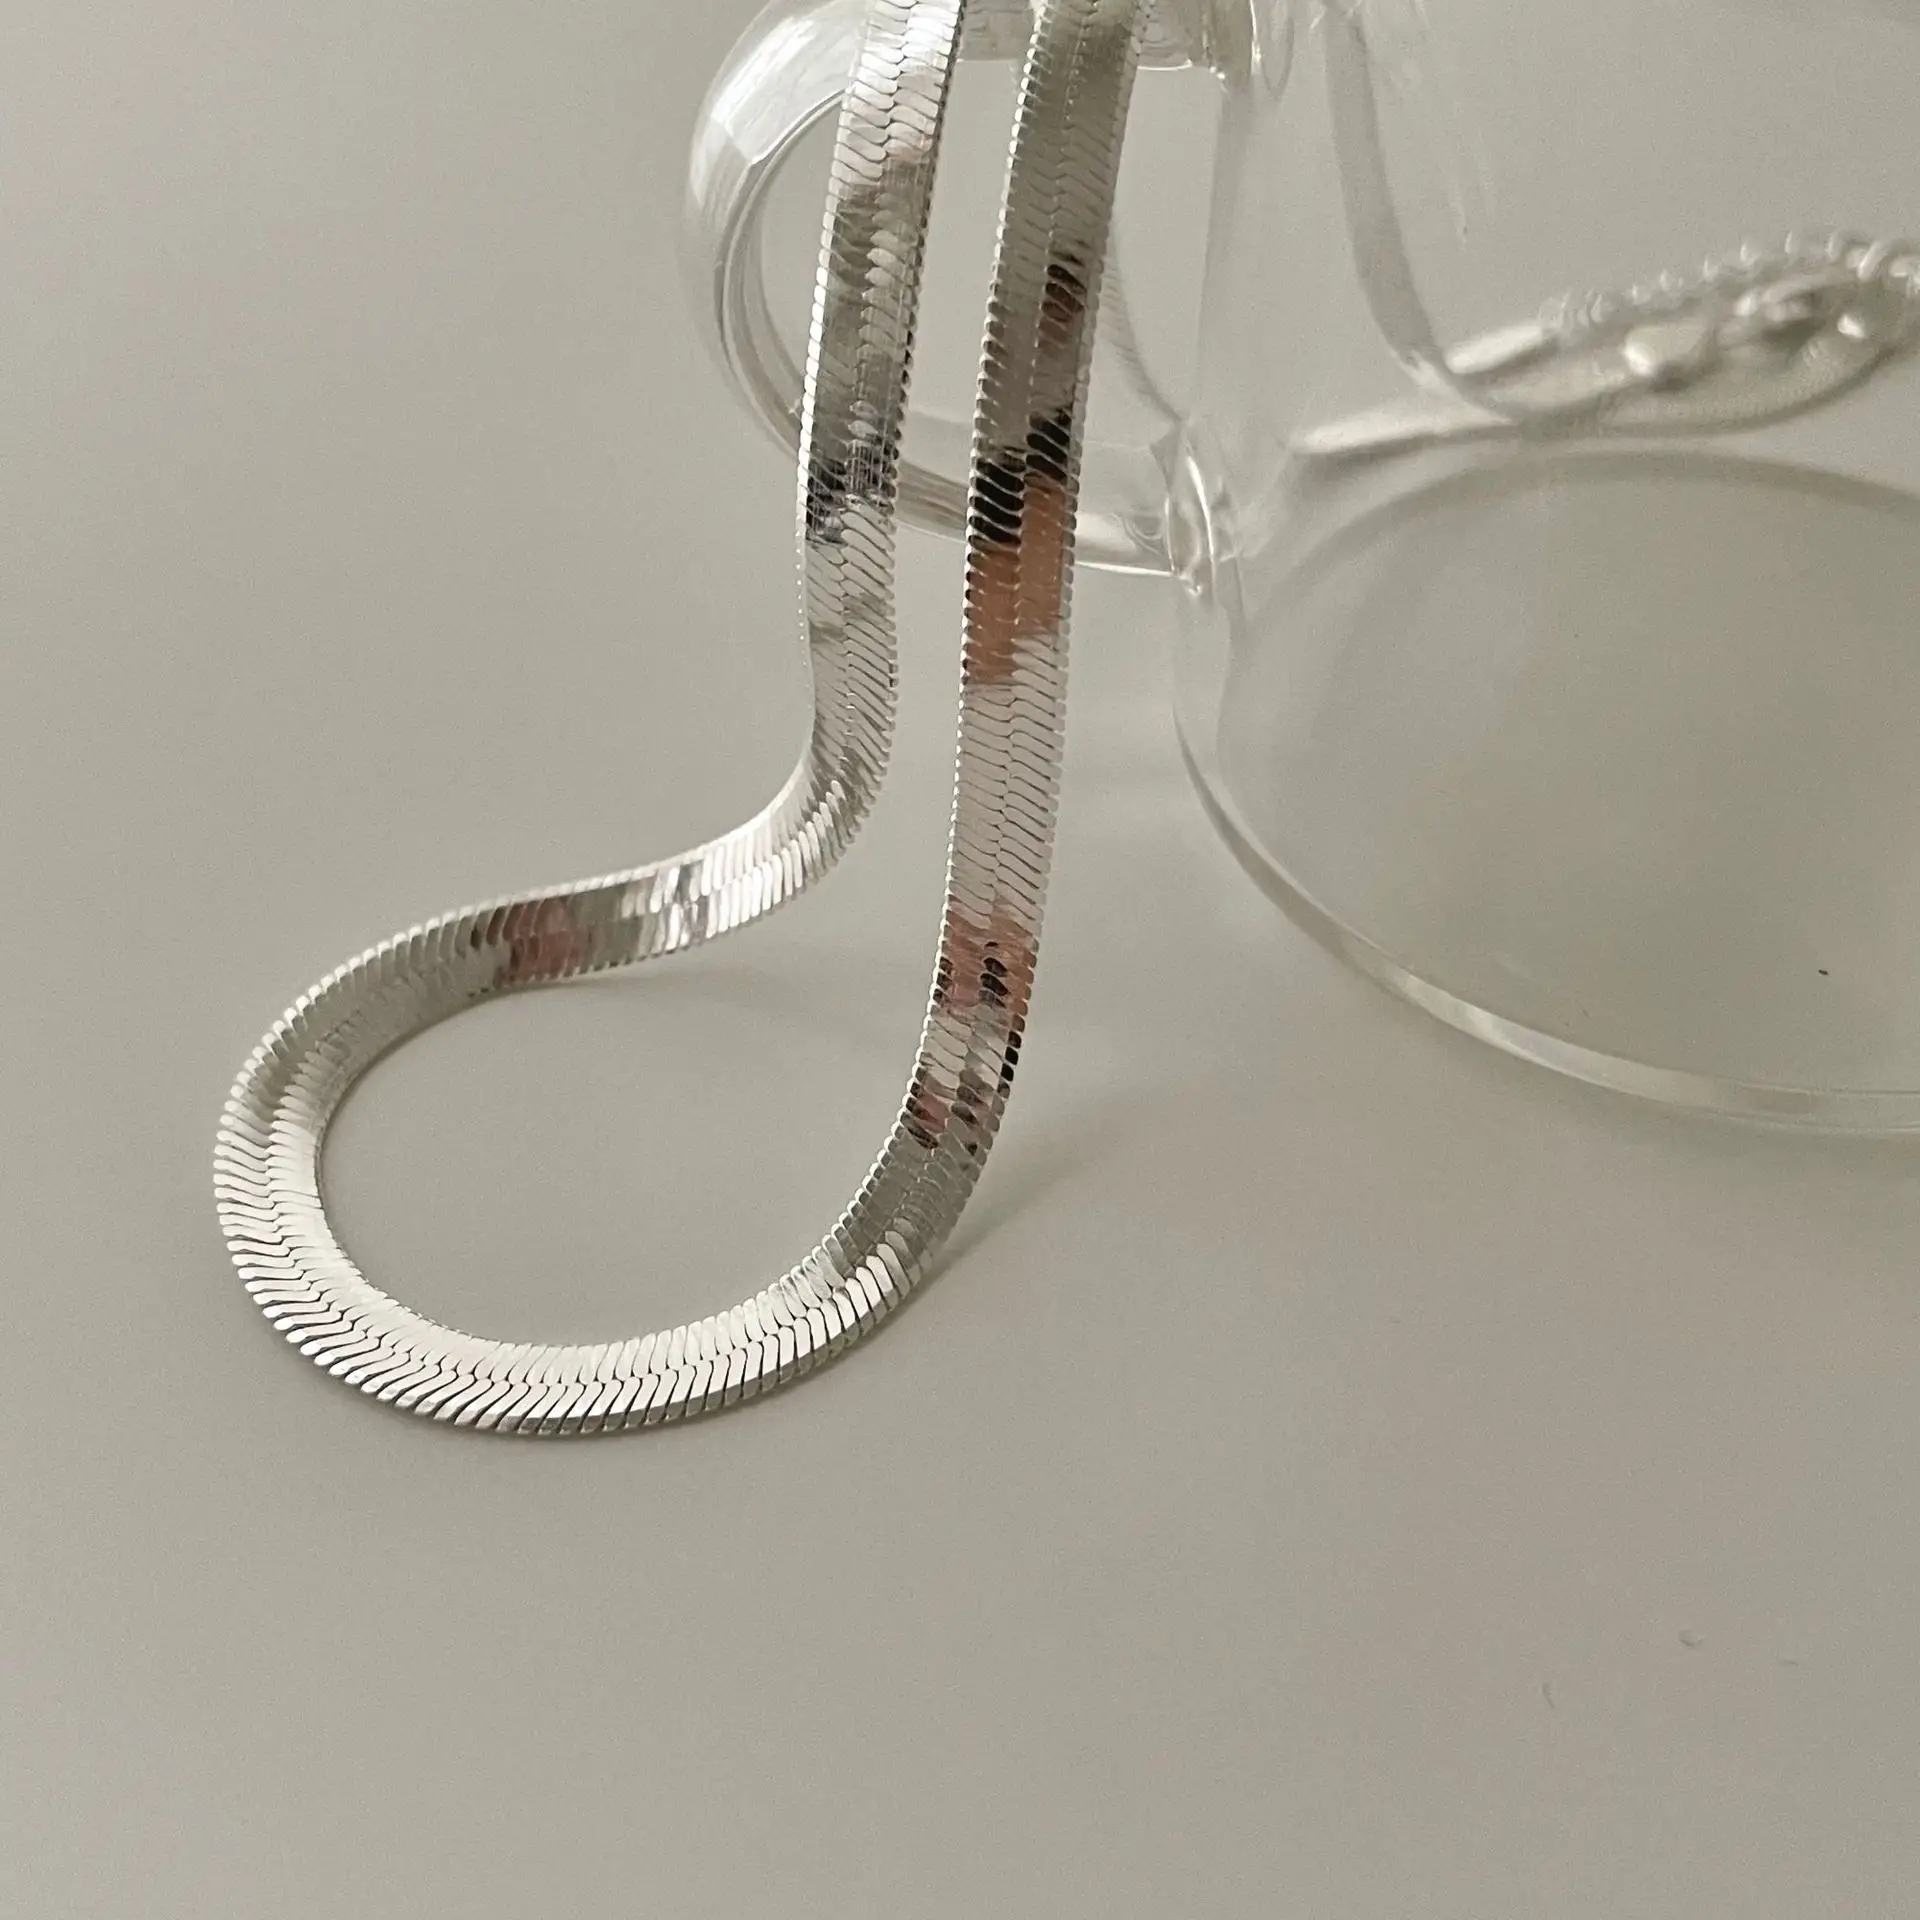 VIANRLA 925 sterling silver 4mm herringbone chain necklace 41cm flat snake chain necklace